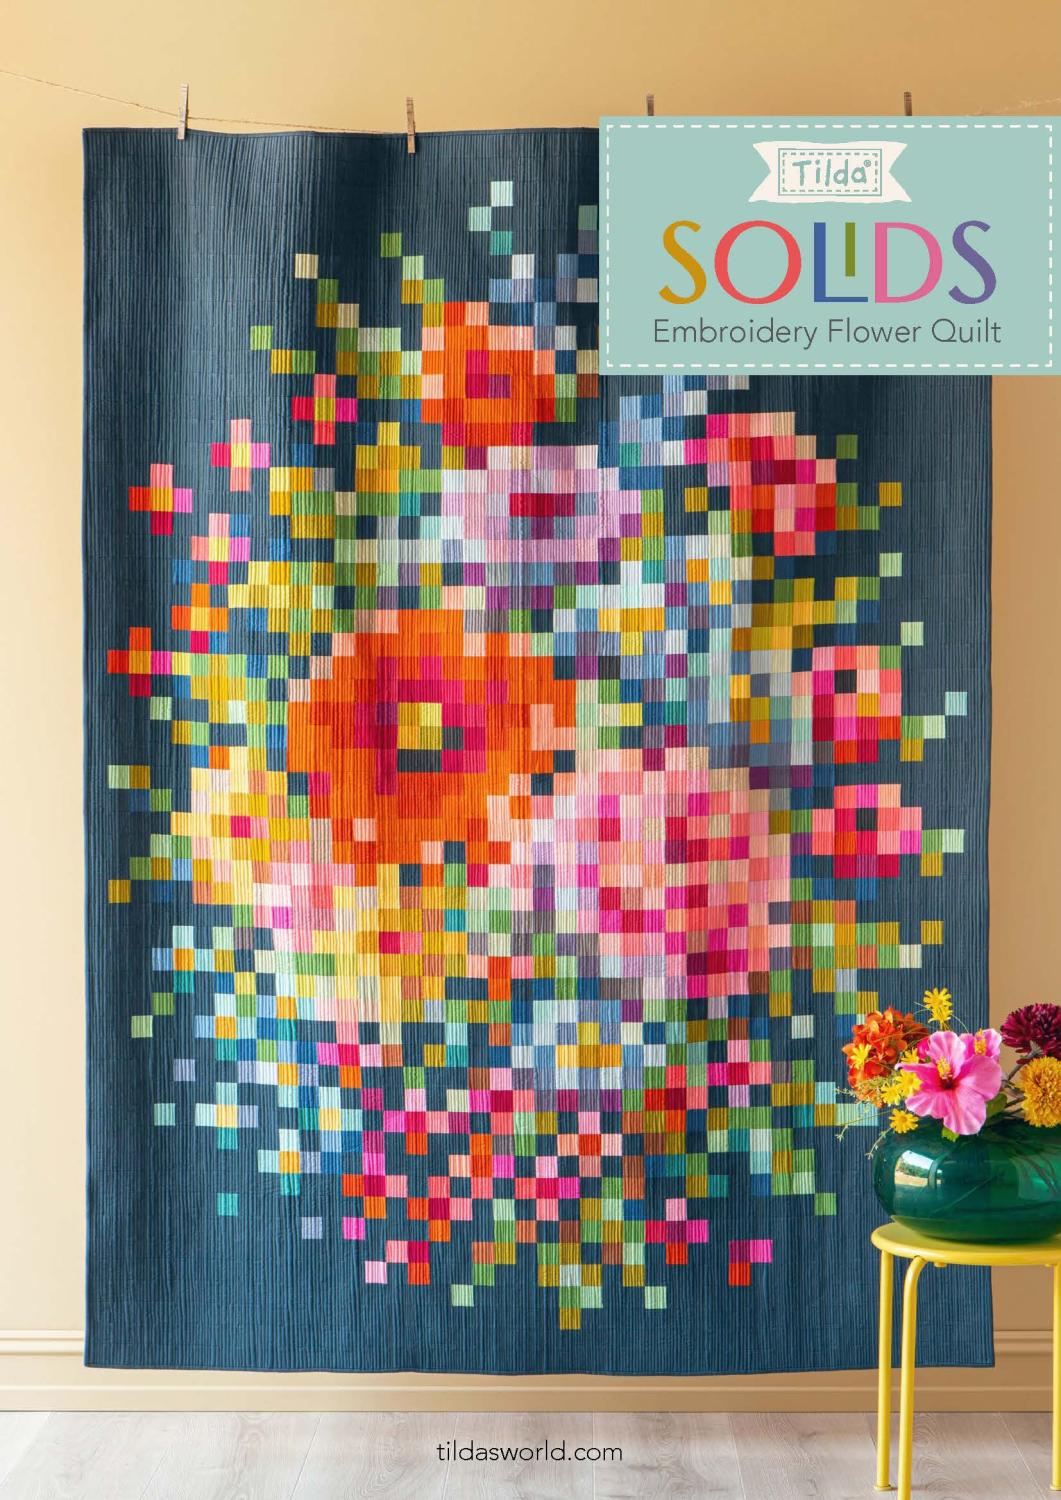 Tilda Embroidery Flower Quilt